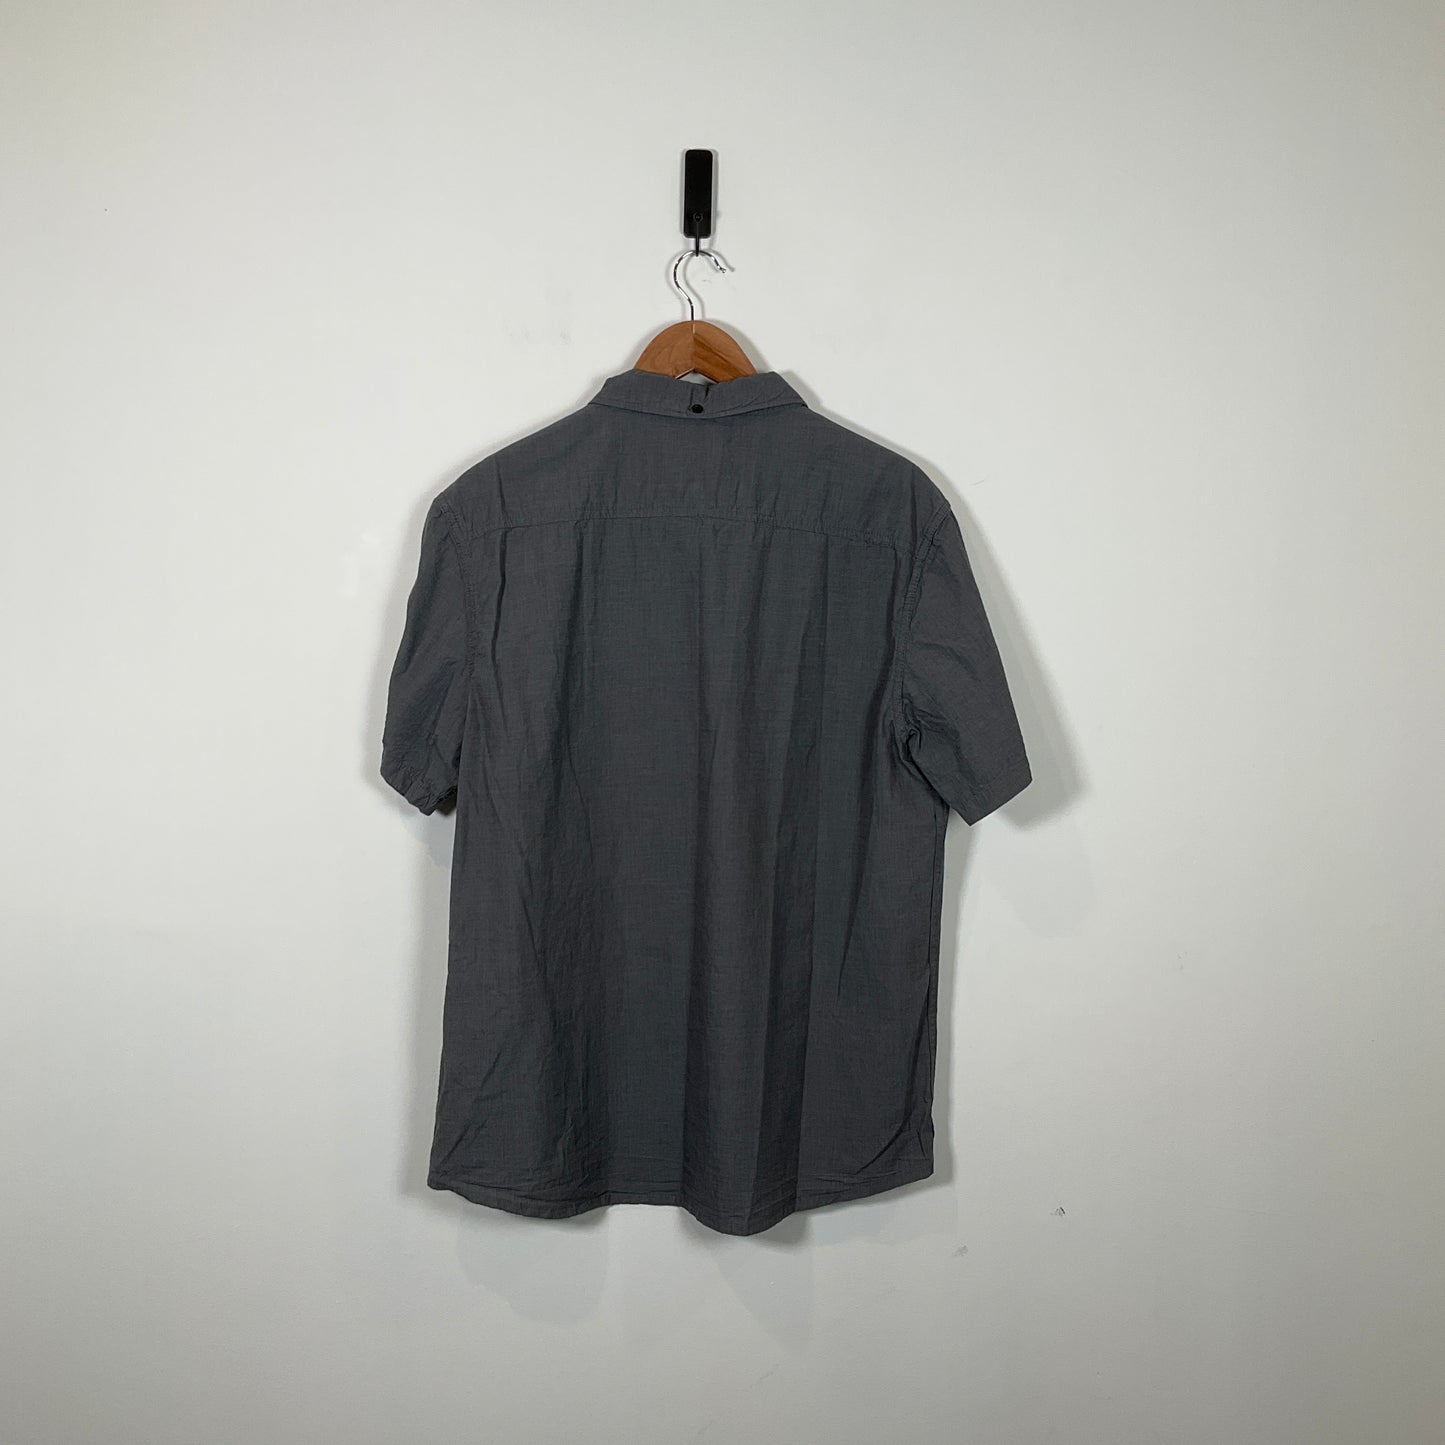 Quiksilver - Grey Short Sleeve Shirt